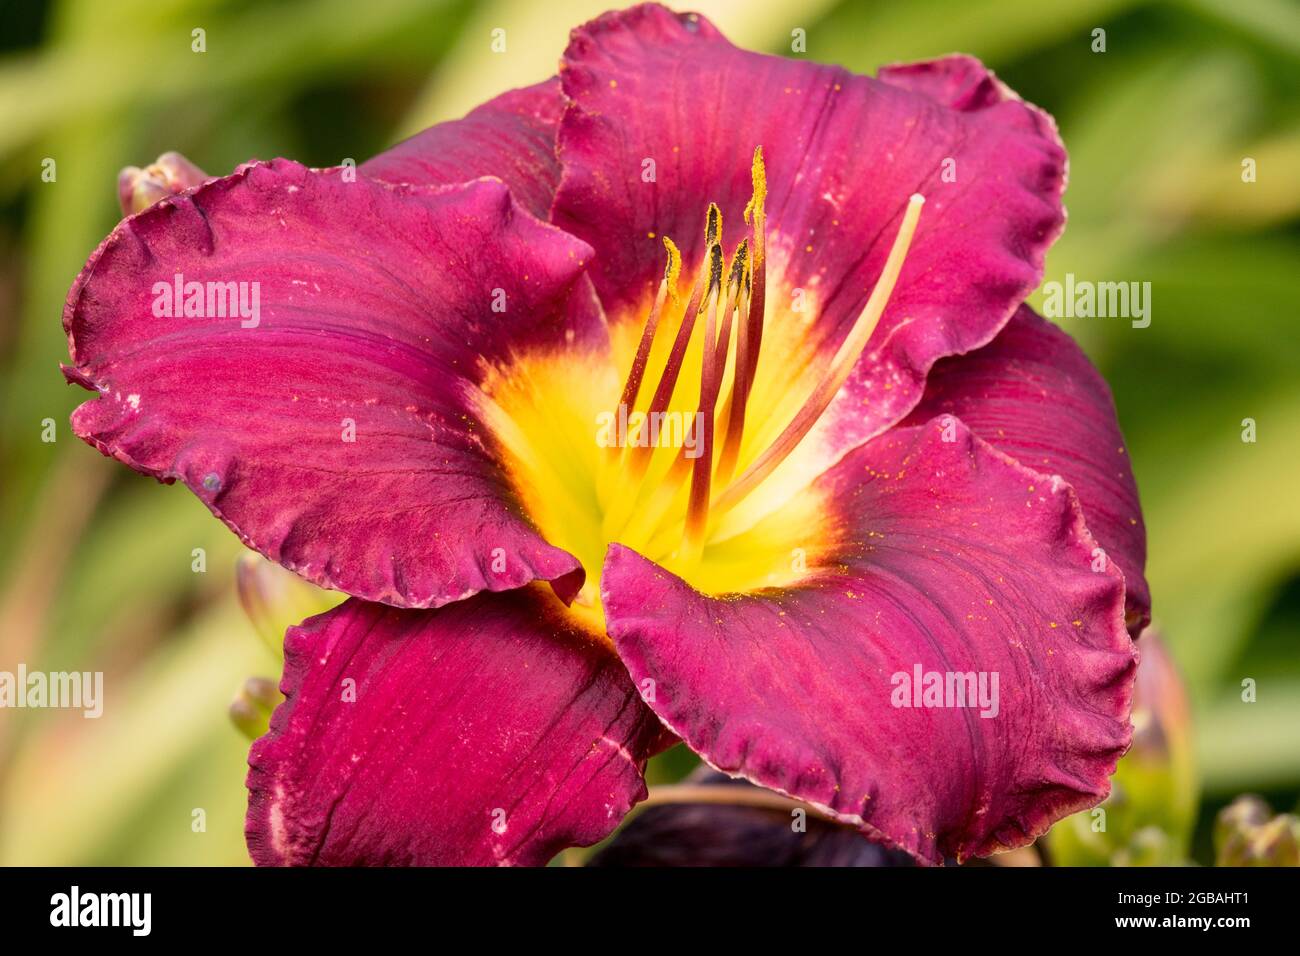 Taglilie Hemerocallis 'Bela Lugosi' Blume Taglilie Stockfoto